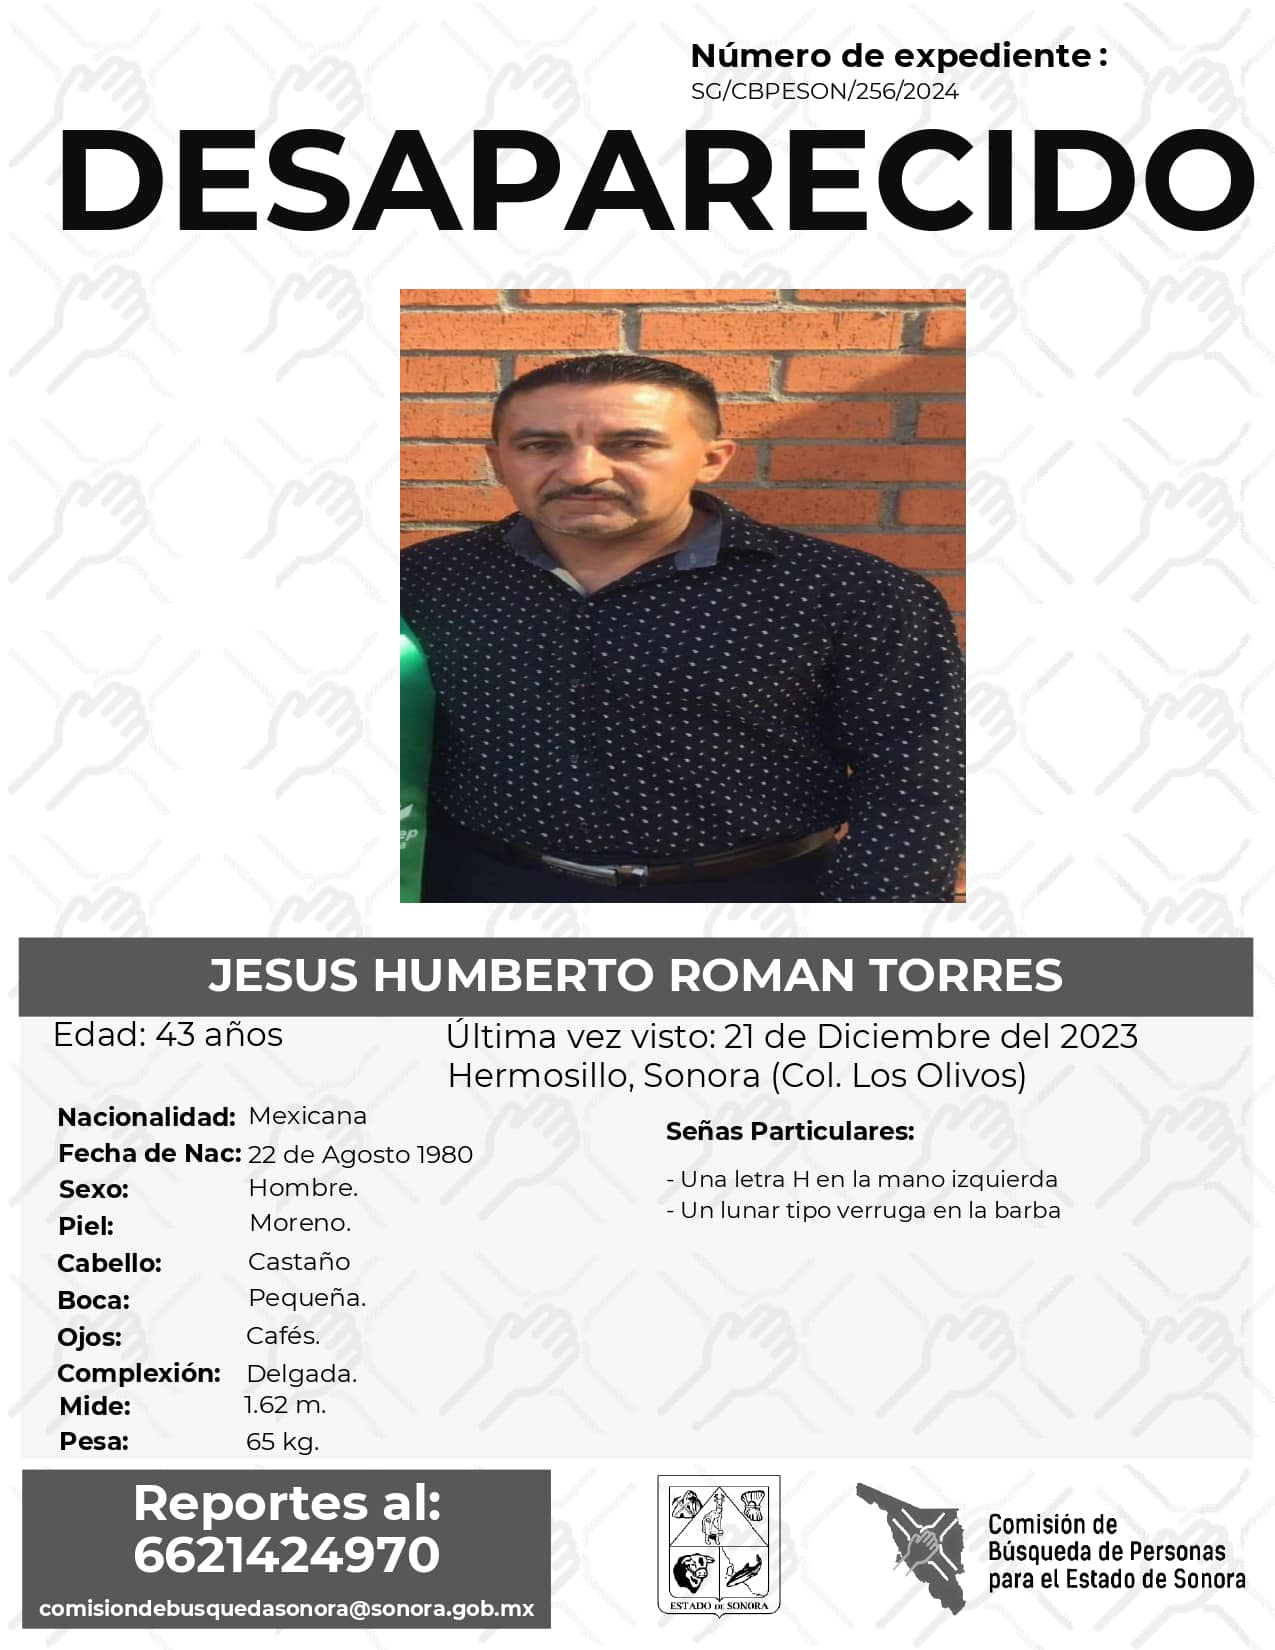 JESUS HUMBERTO ROMAN TORRES - DESAPARECIDO